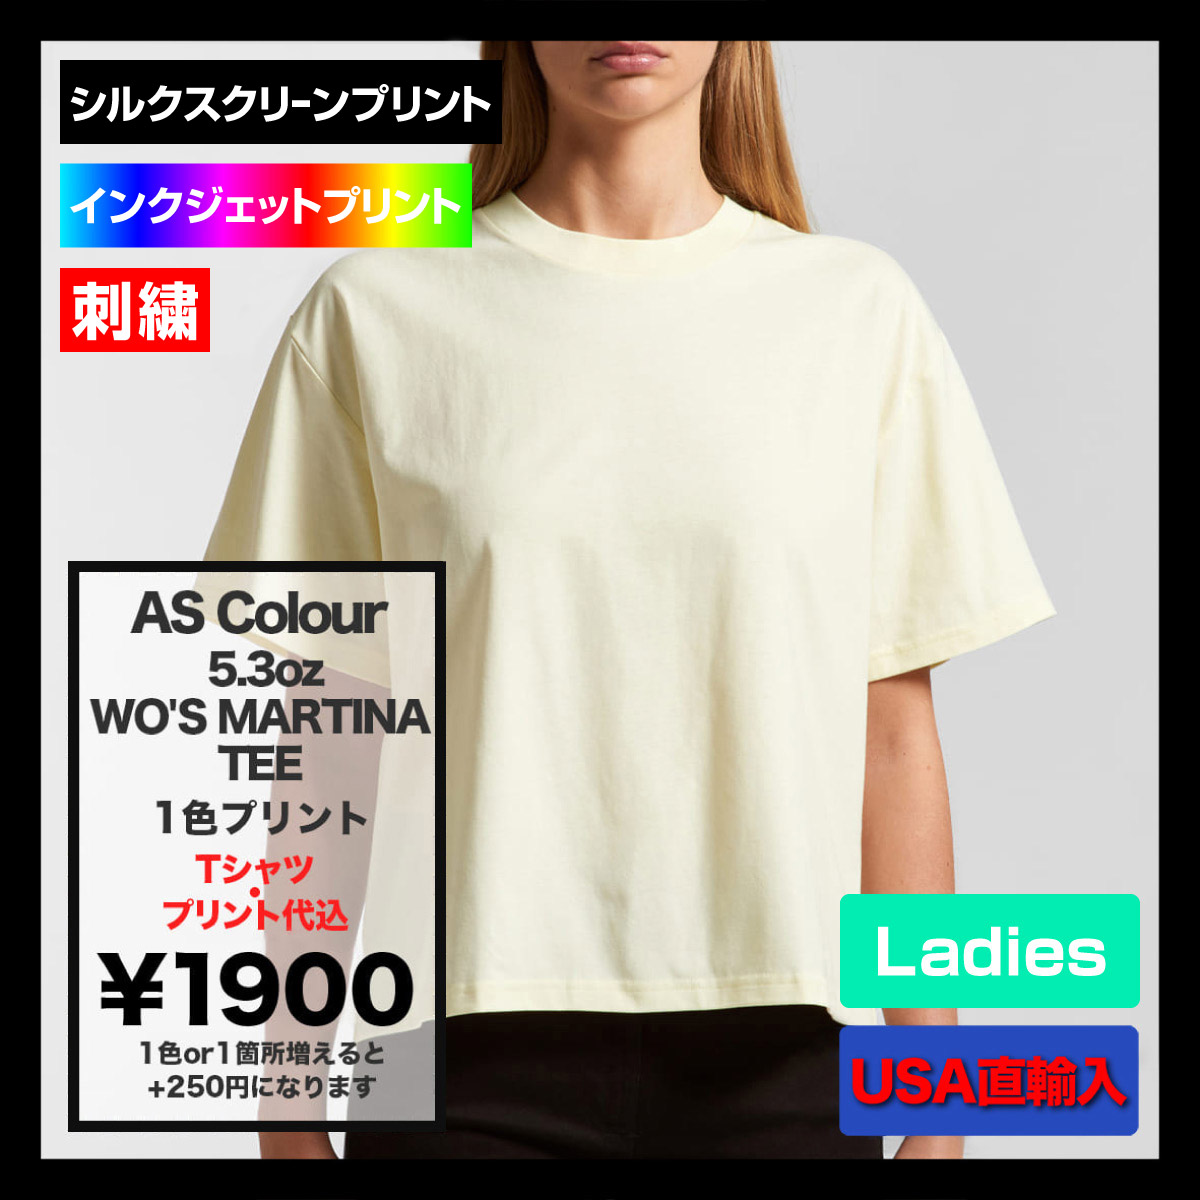 AS Colour アズカラー 5.3 oz WO'S MARTINA TEE (品番4006US)